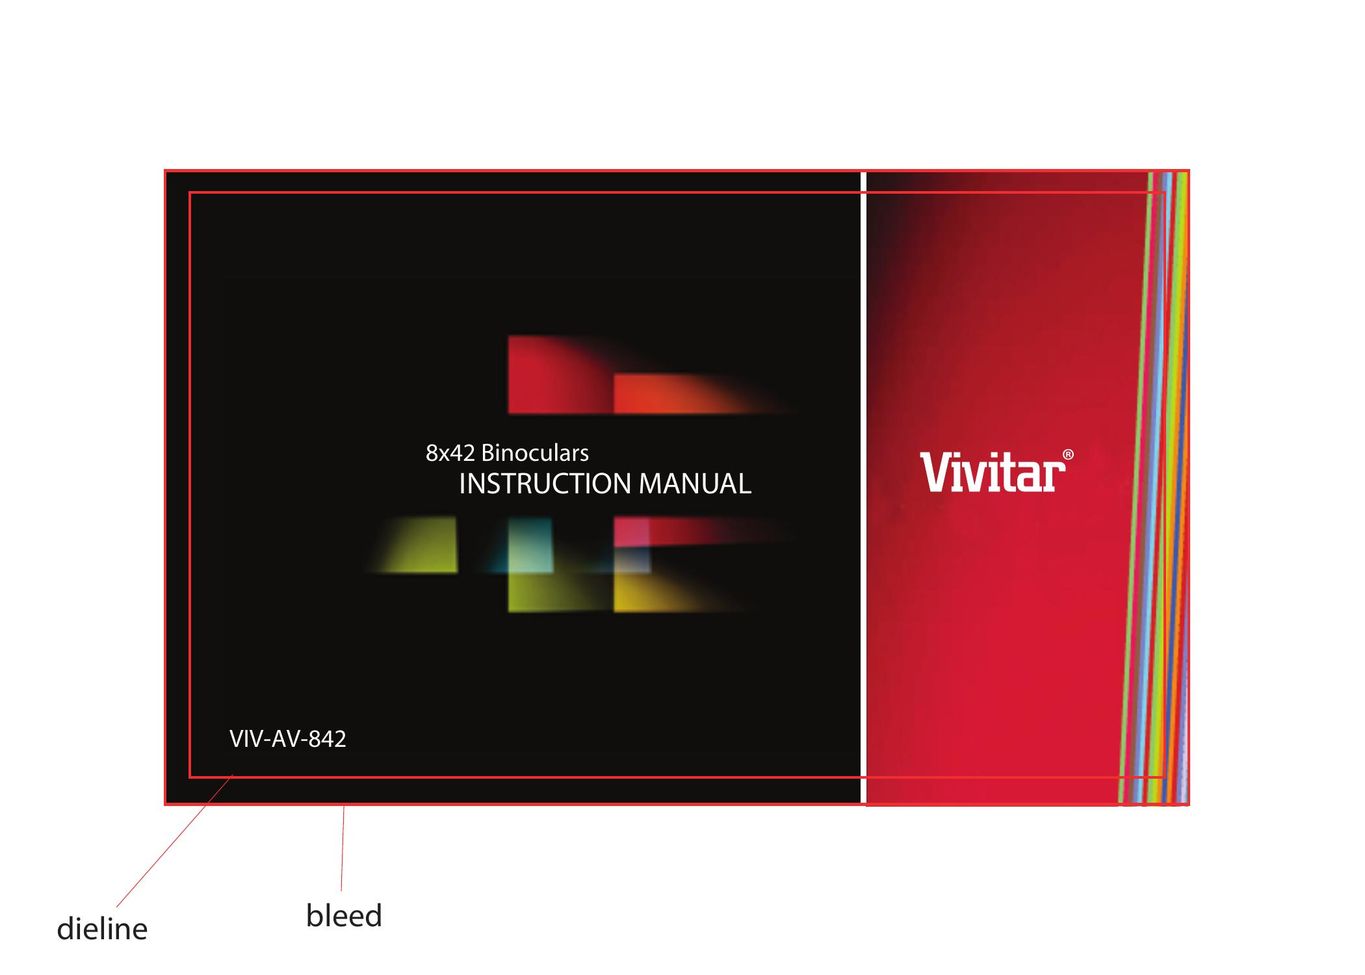 Vivitar VIV-AV-842 Binoculars User Manual